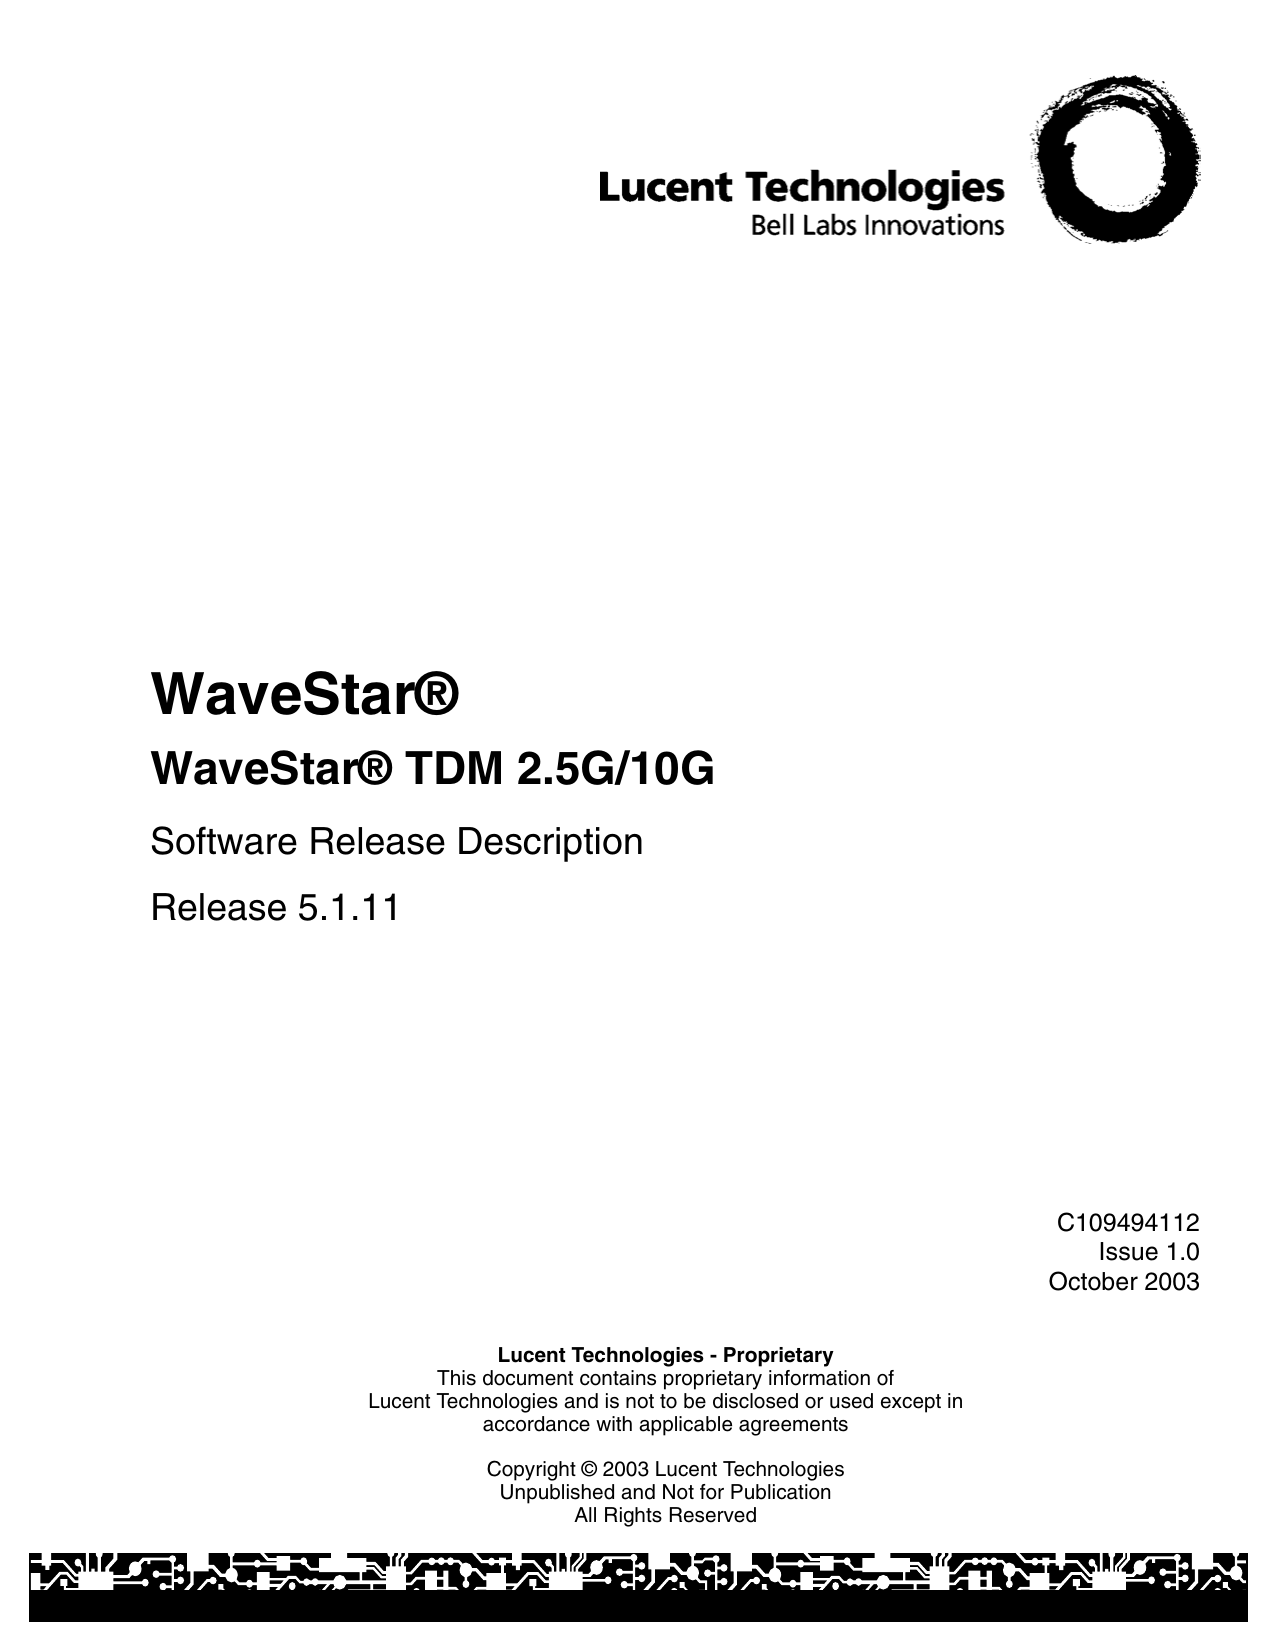 download wavestar software